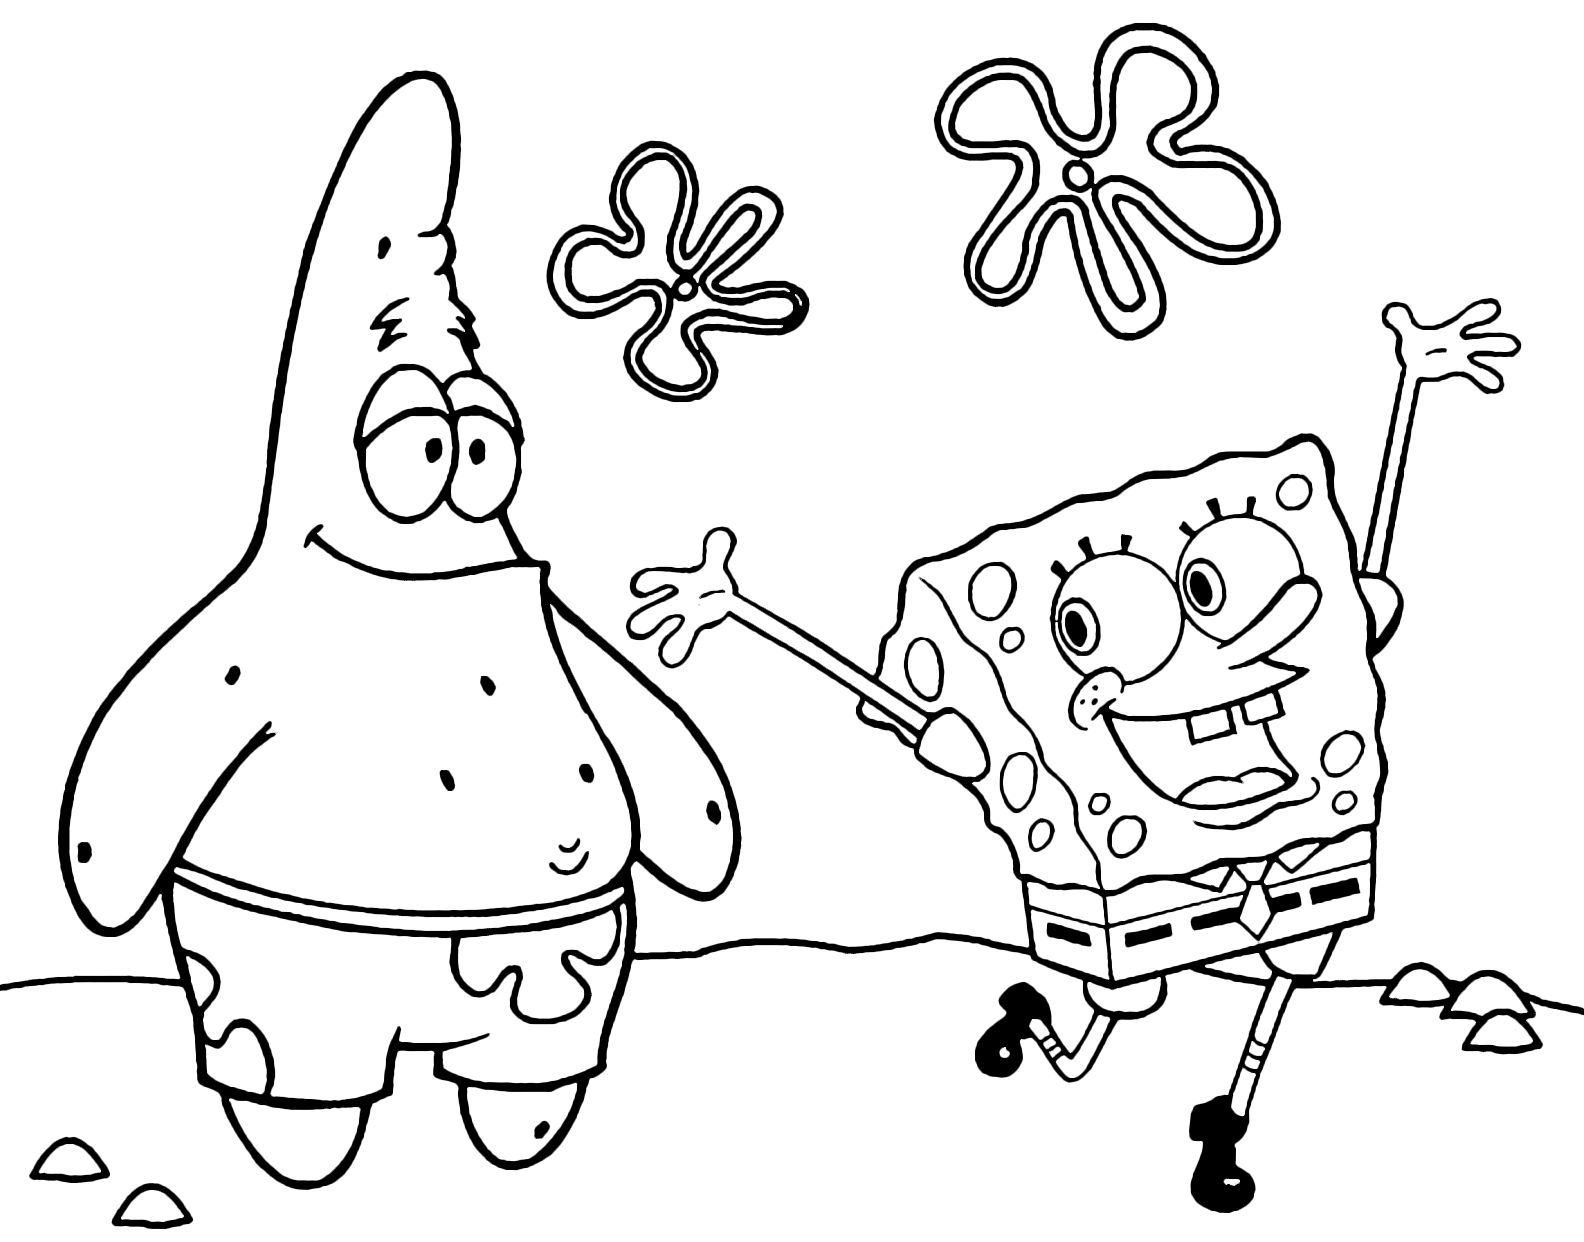 SpongeBob - SpongeBob plays happy with his best friend Patrick Star